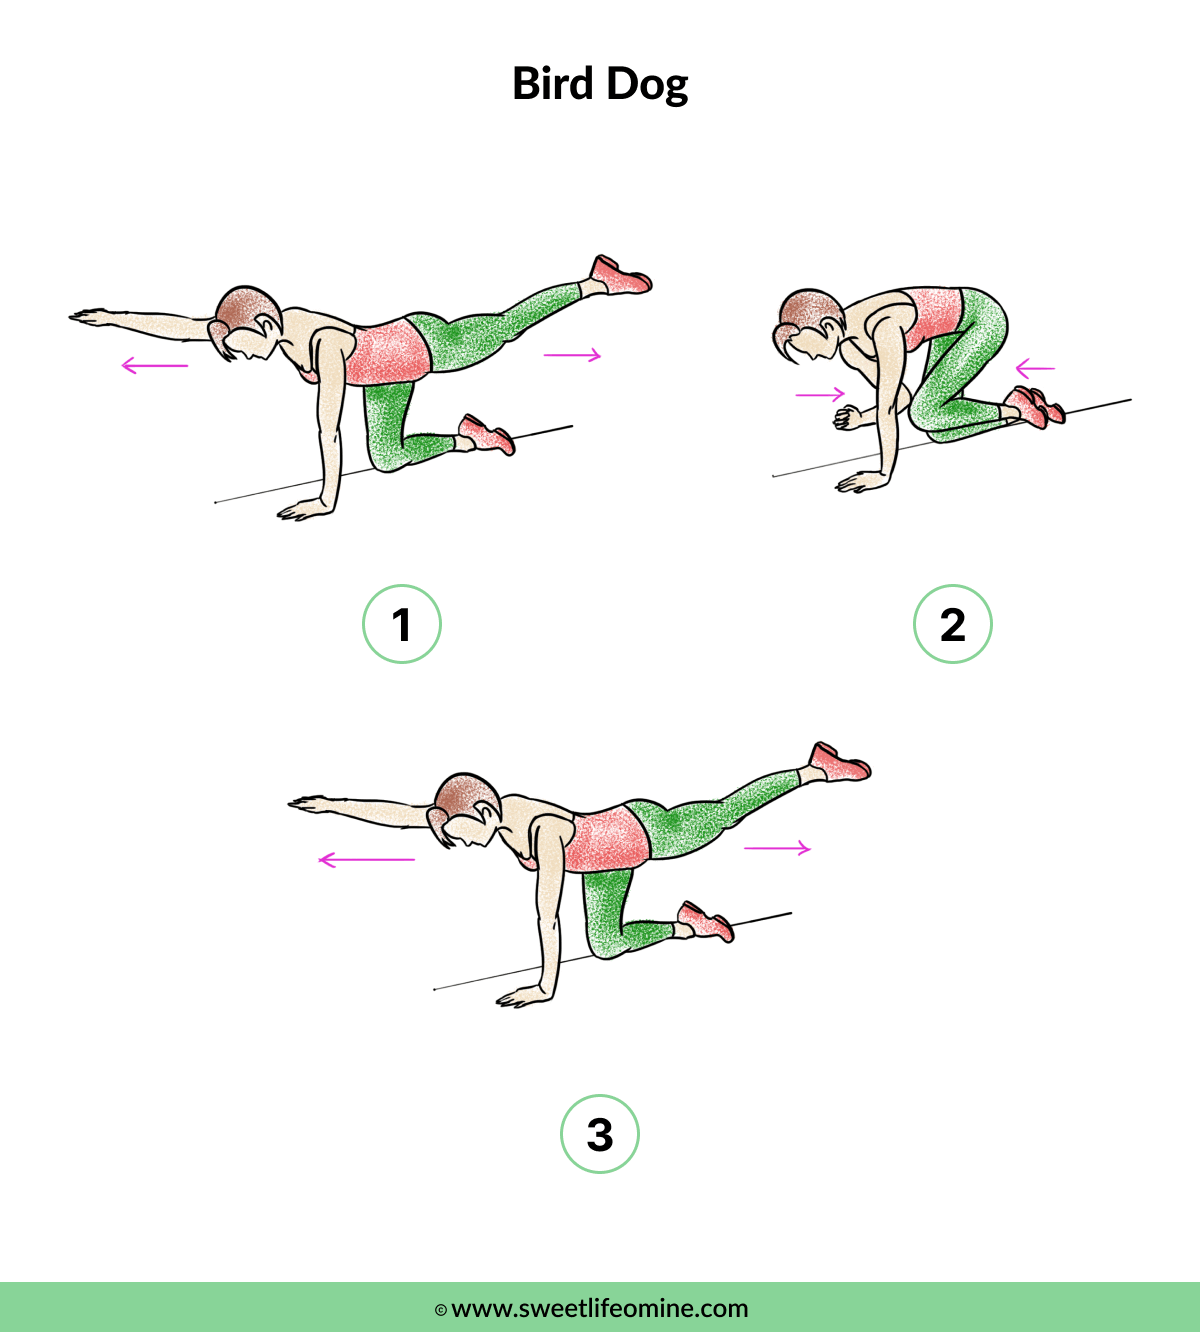 Bird dog - Muffin Top Exercise